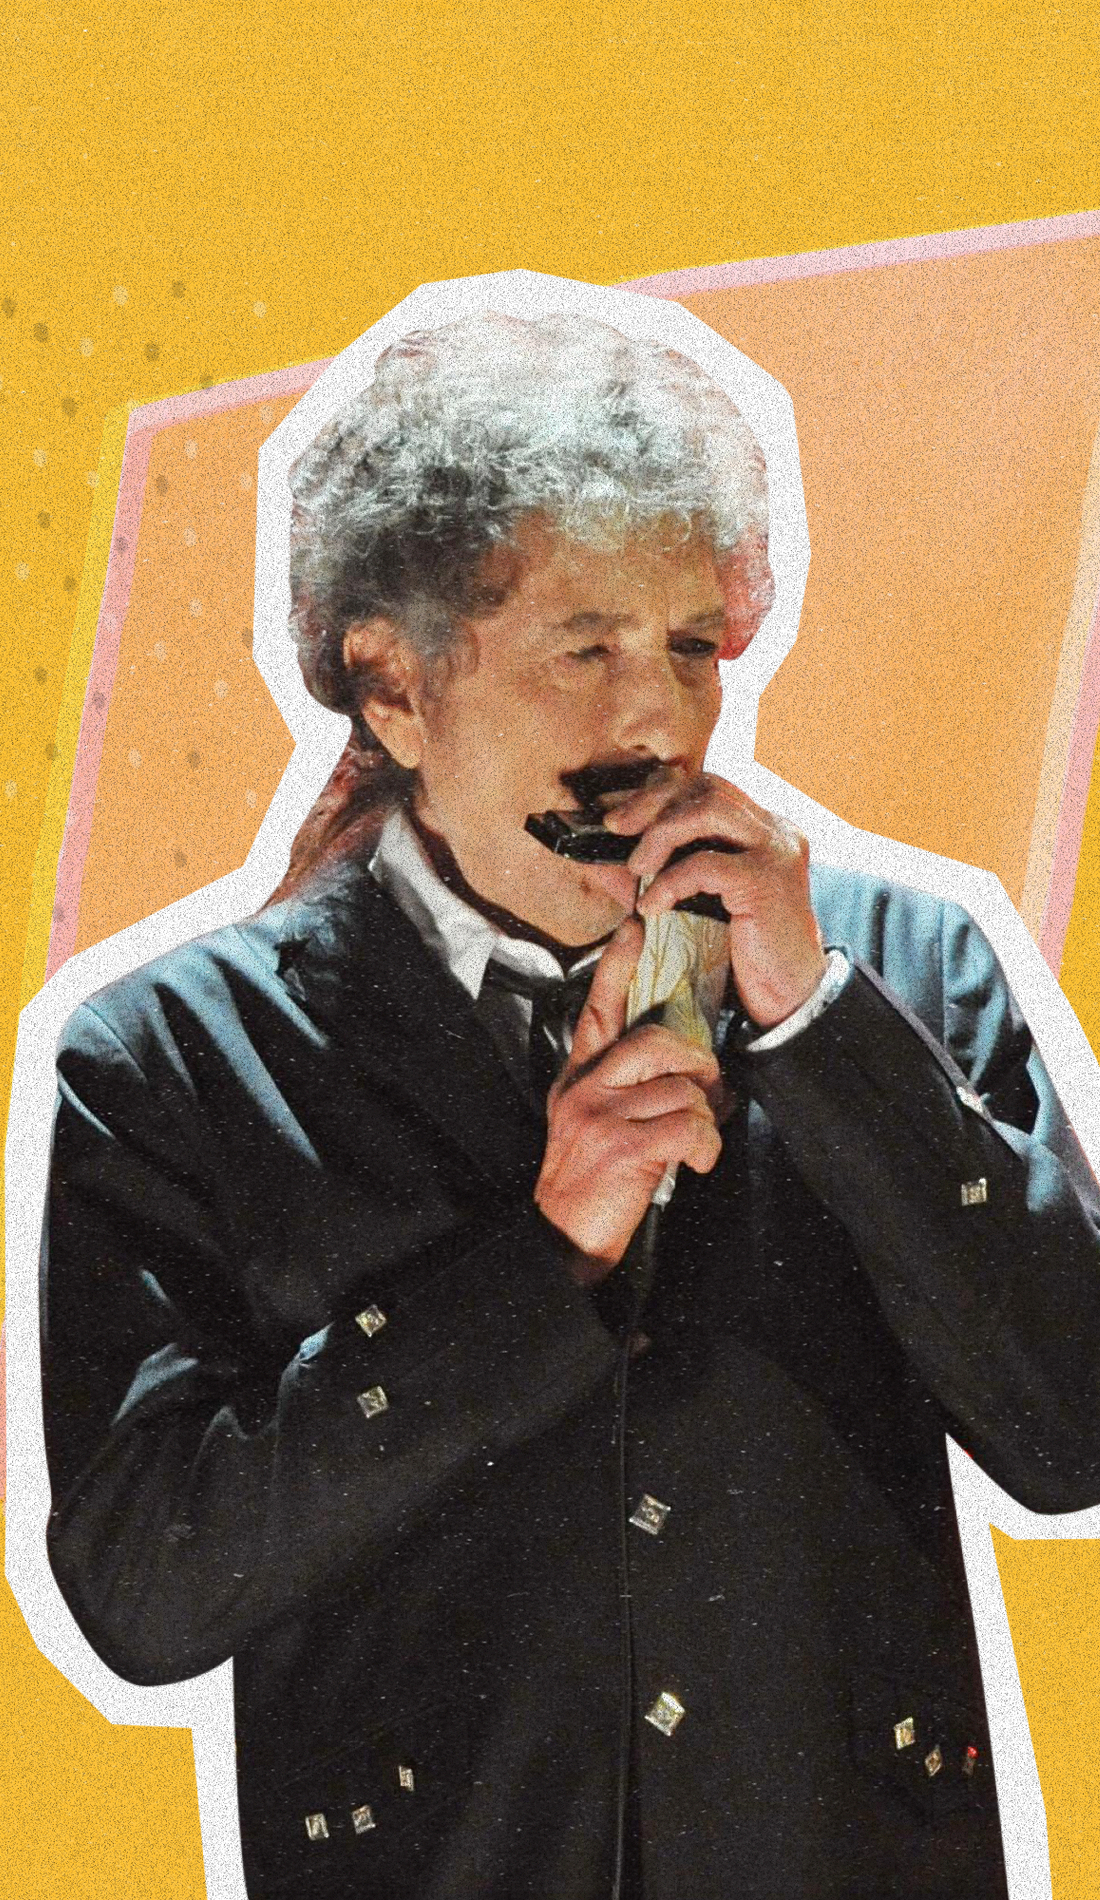 A Bob Dylan live event